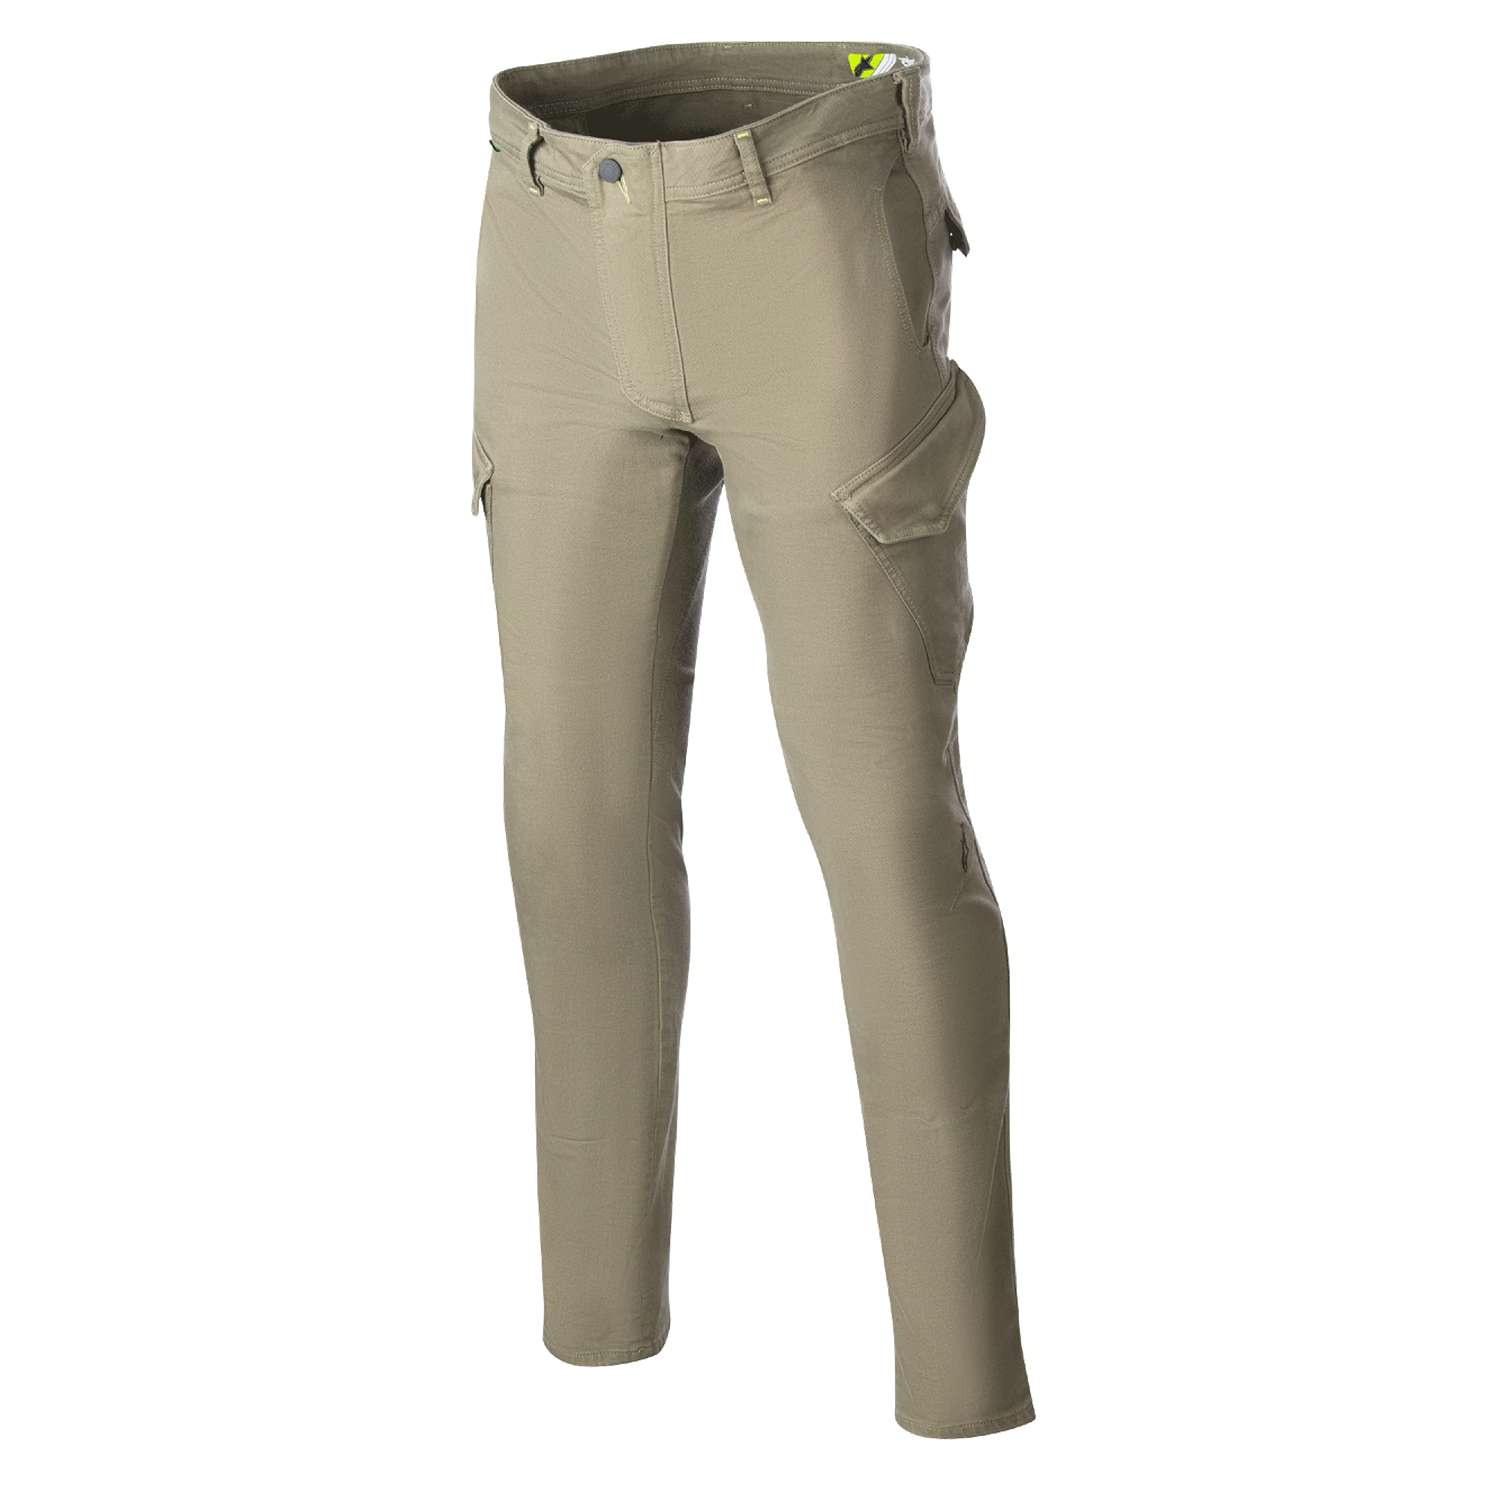 Image of Alpinestars Caliber Slim Fit Tech Riding Pants Military Green Size 33 ID 8059347165233